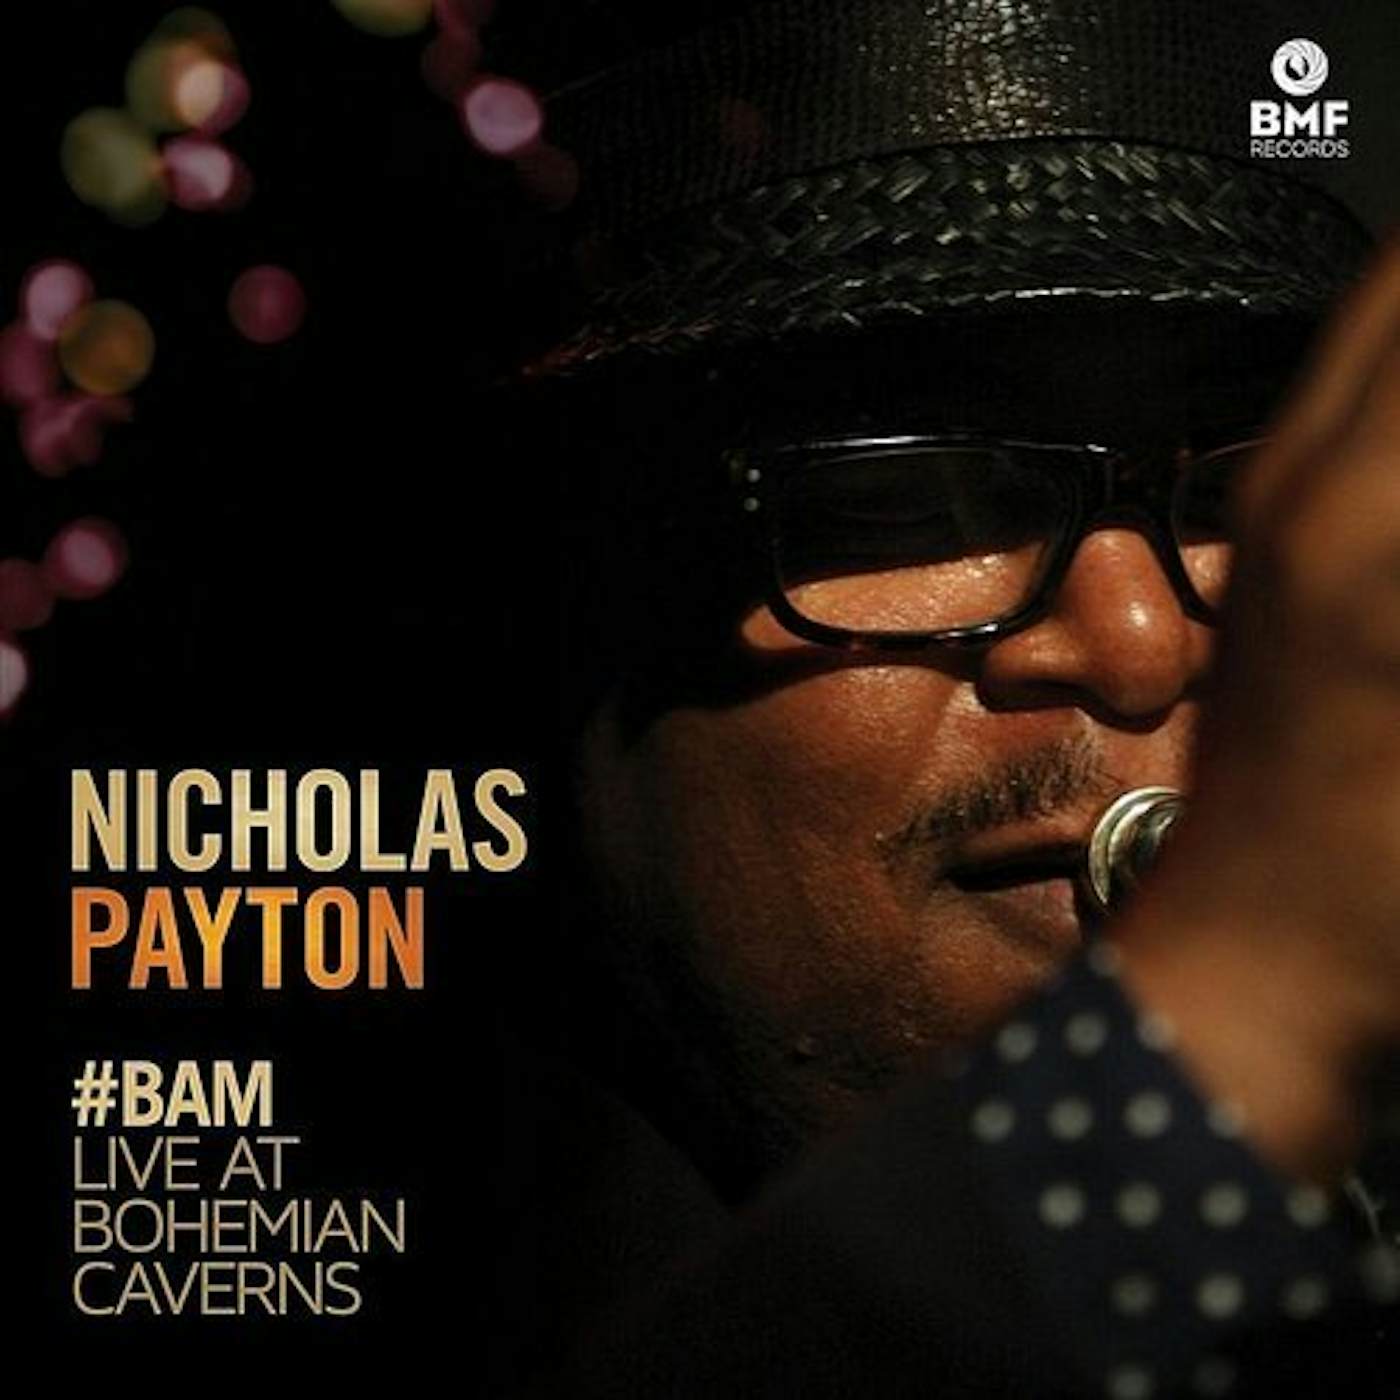 Nicholas Payton BAM LIVE AT BOHEMIAN CAVERNS CD